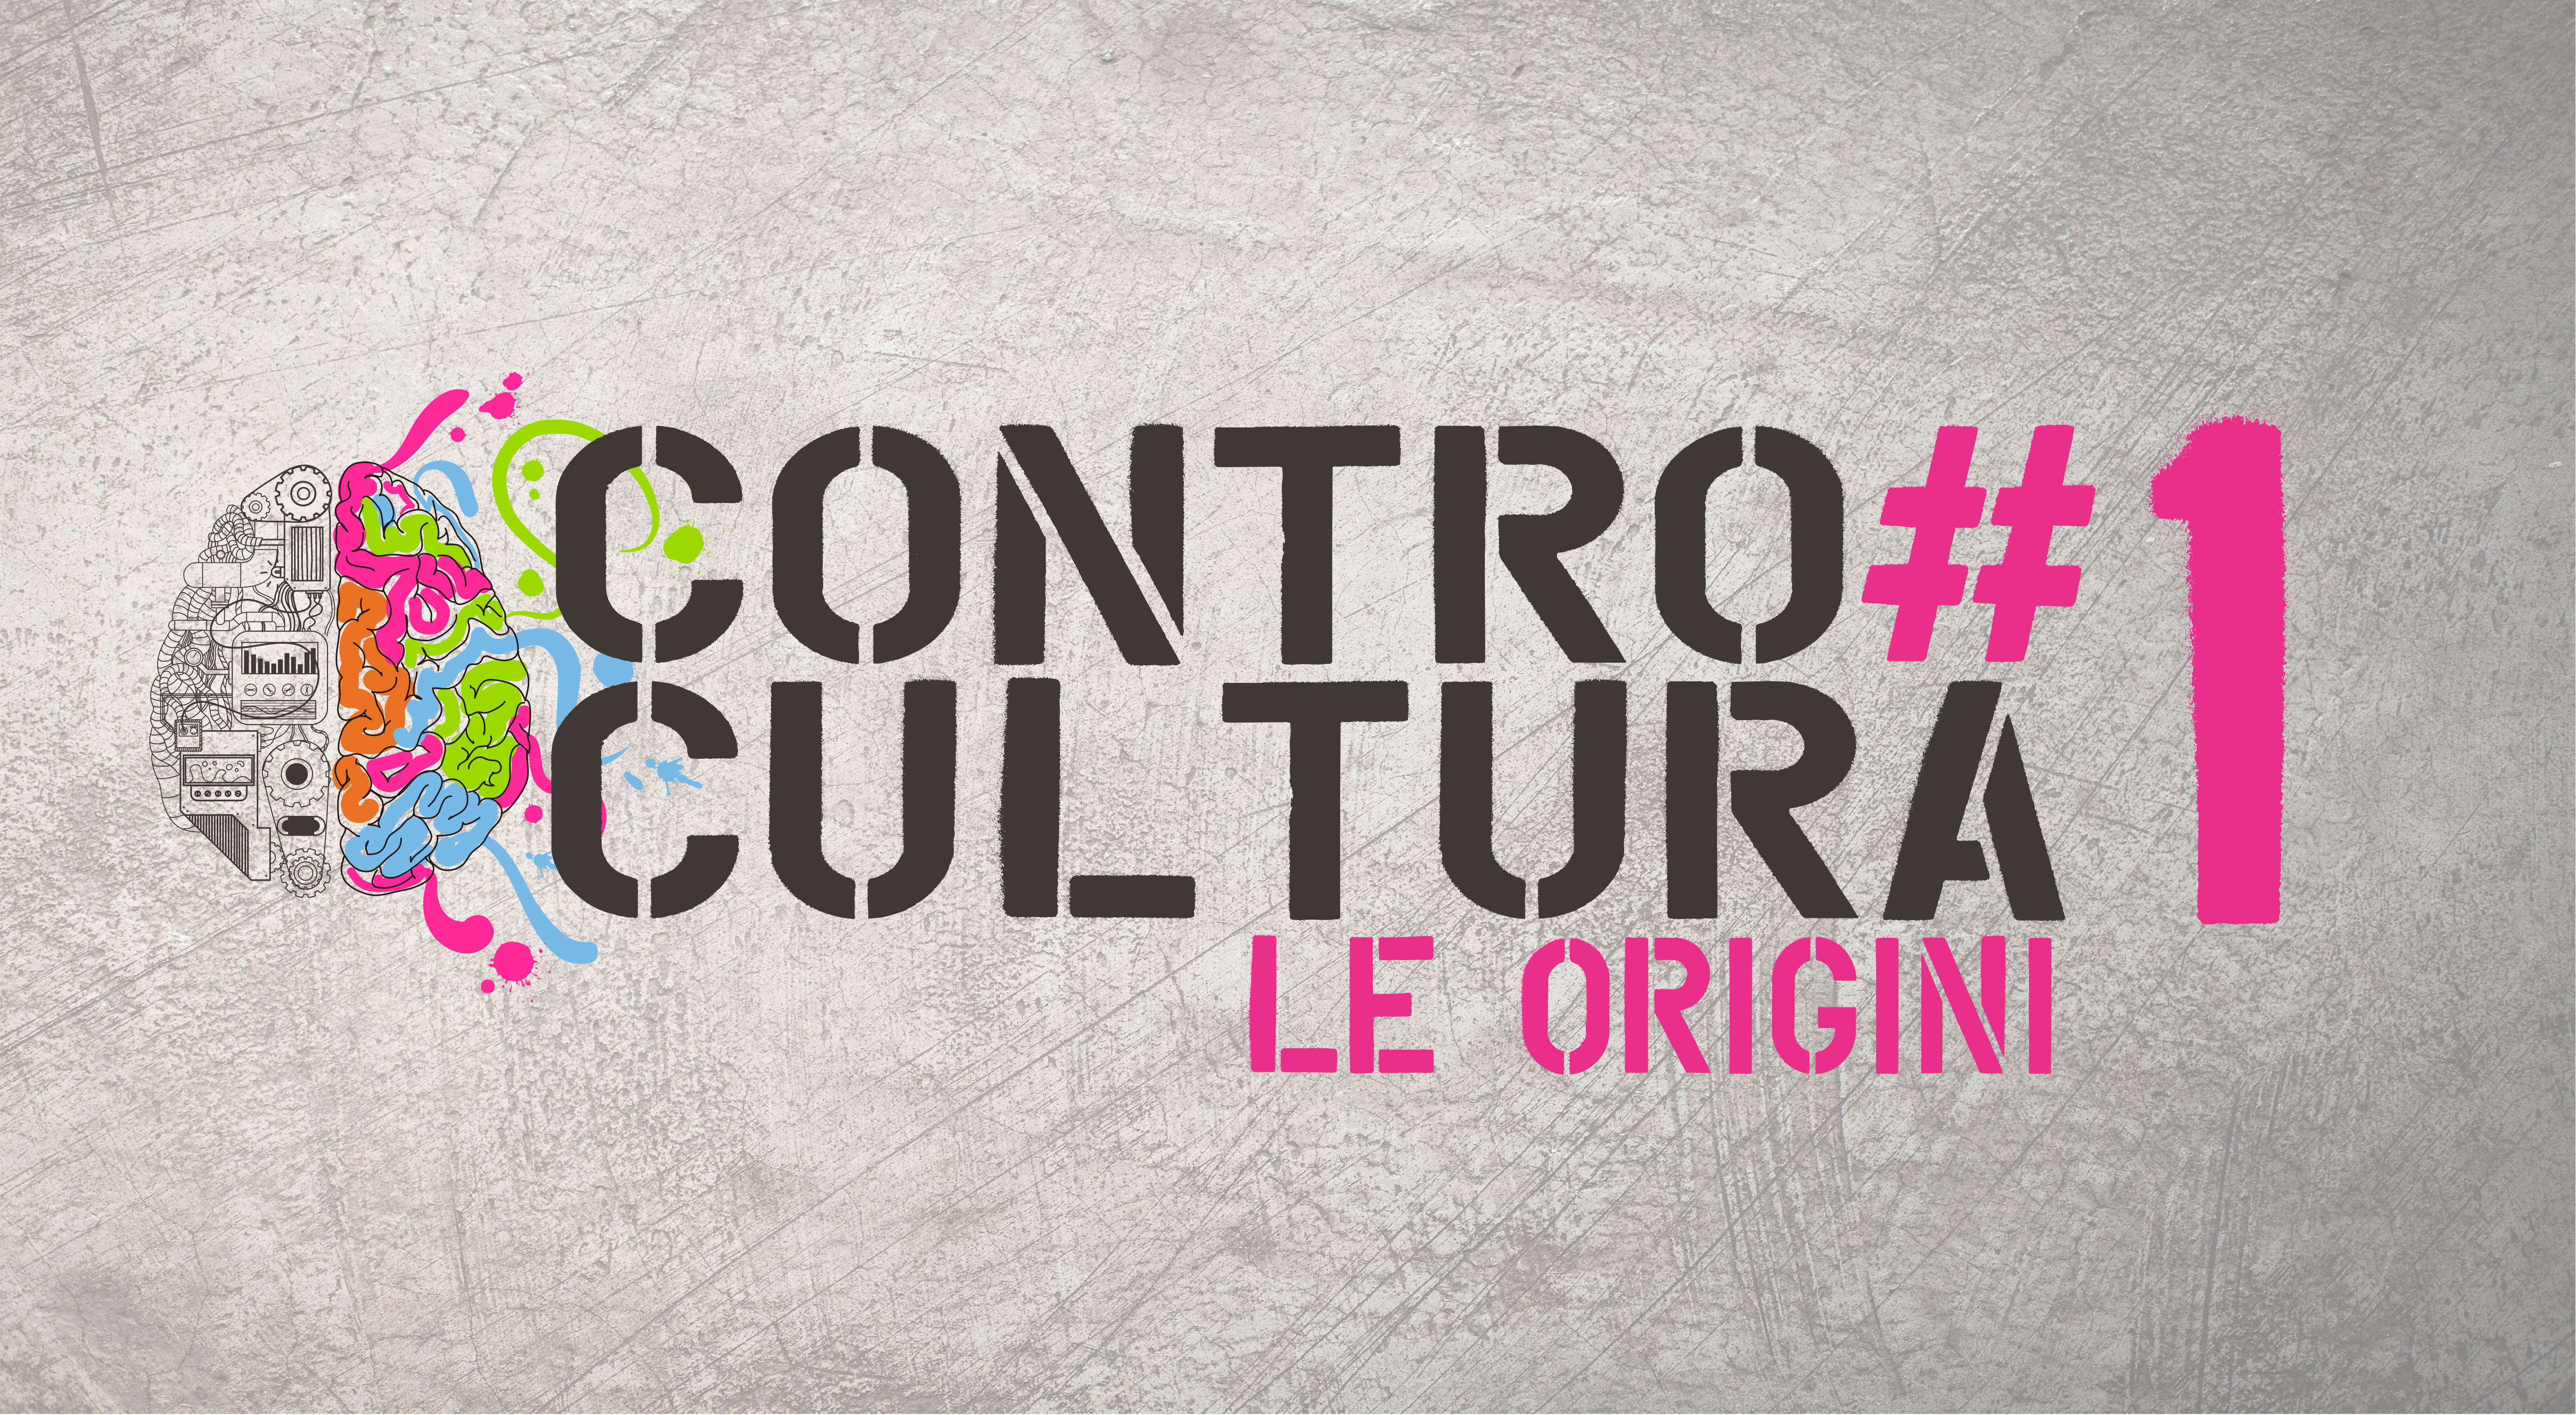 Radio Controcultura logo free web